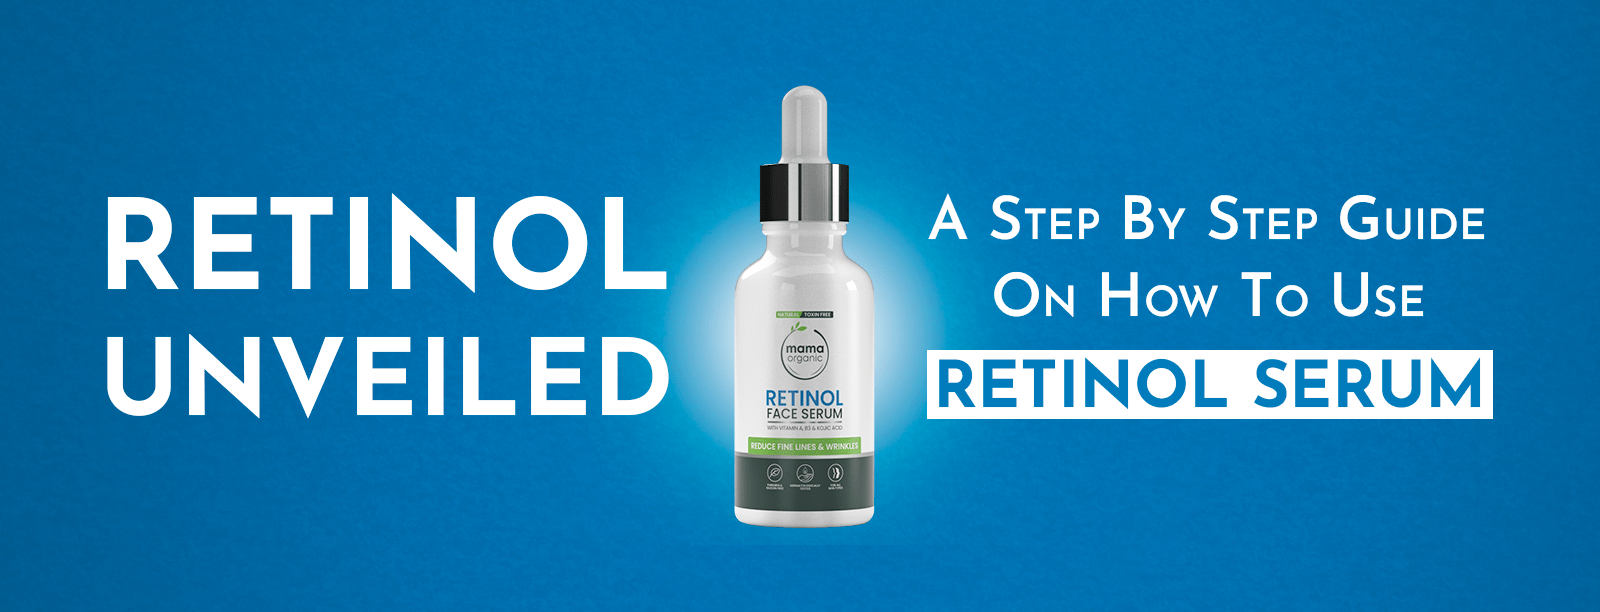 Retinol Unveiled: A Step-by-Step Guide on How to Use Retinol Serum